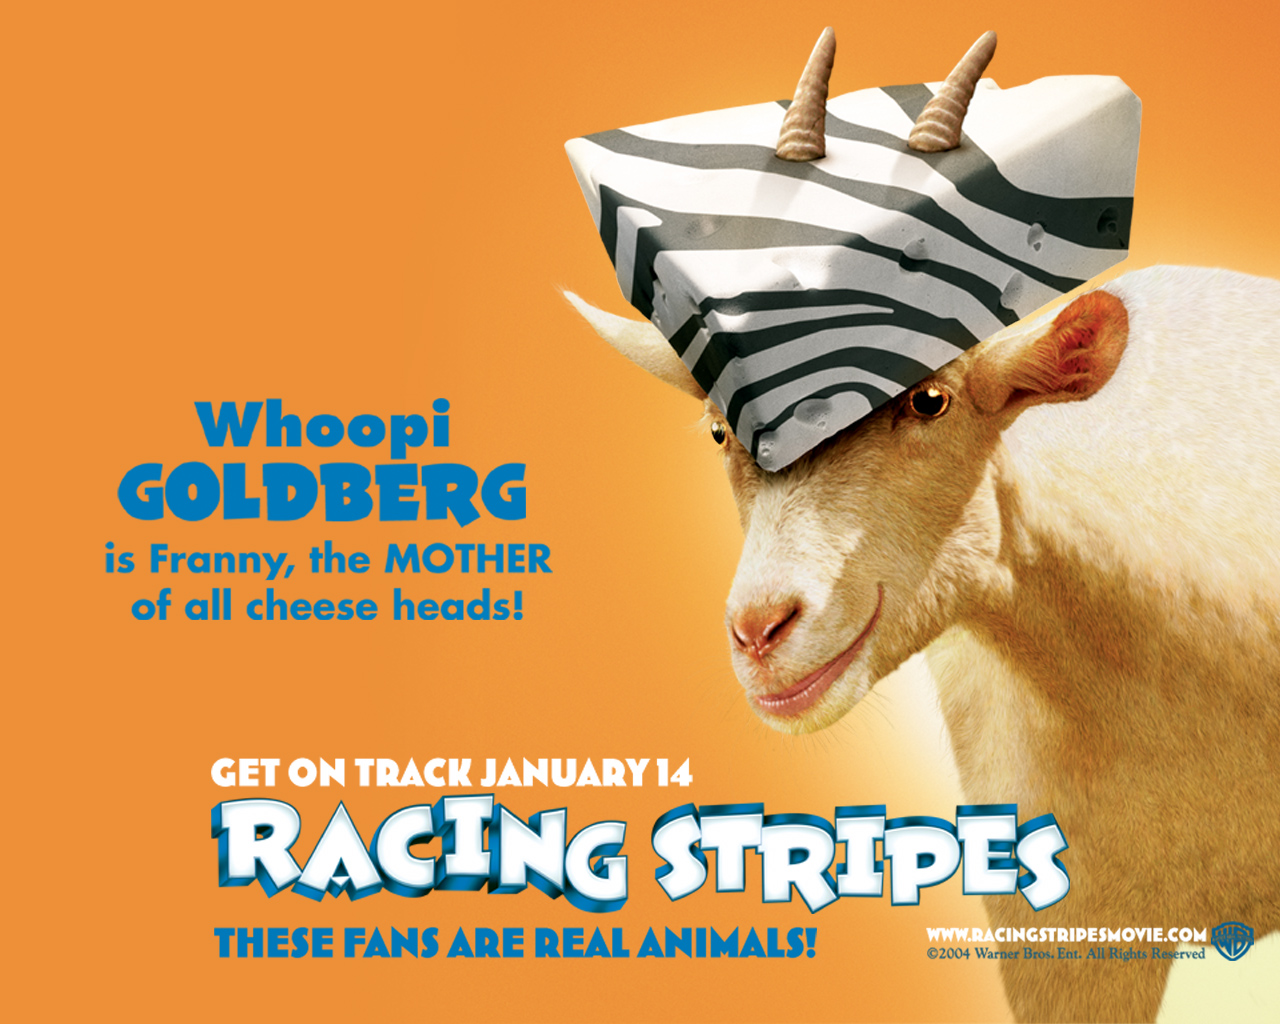 Racing stripes 3